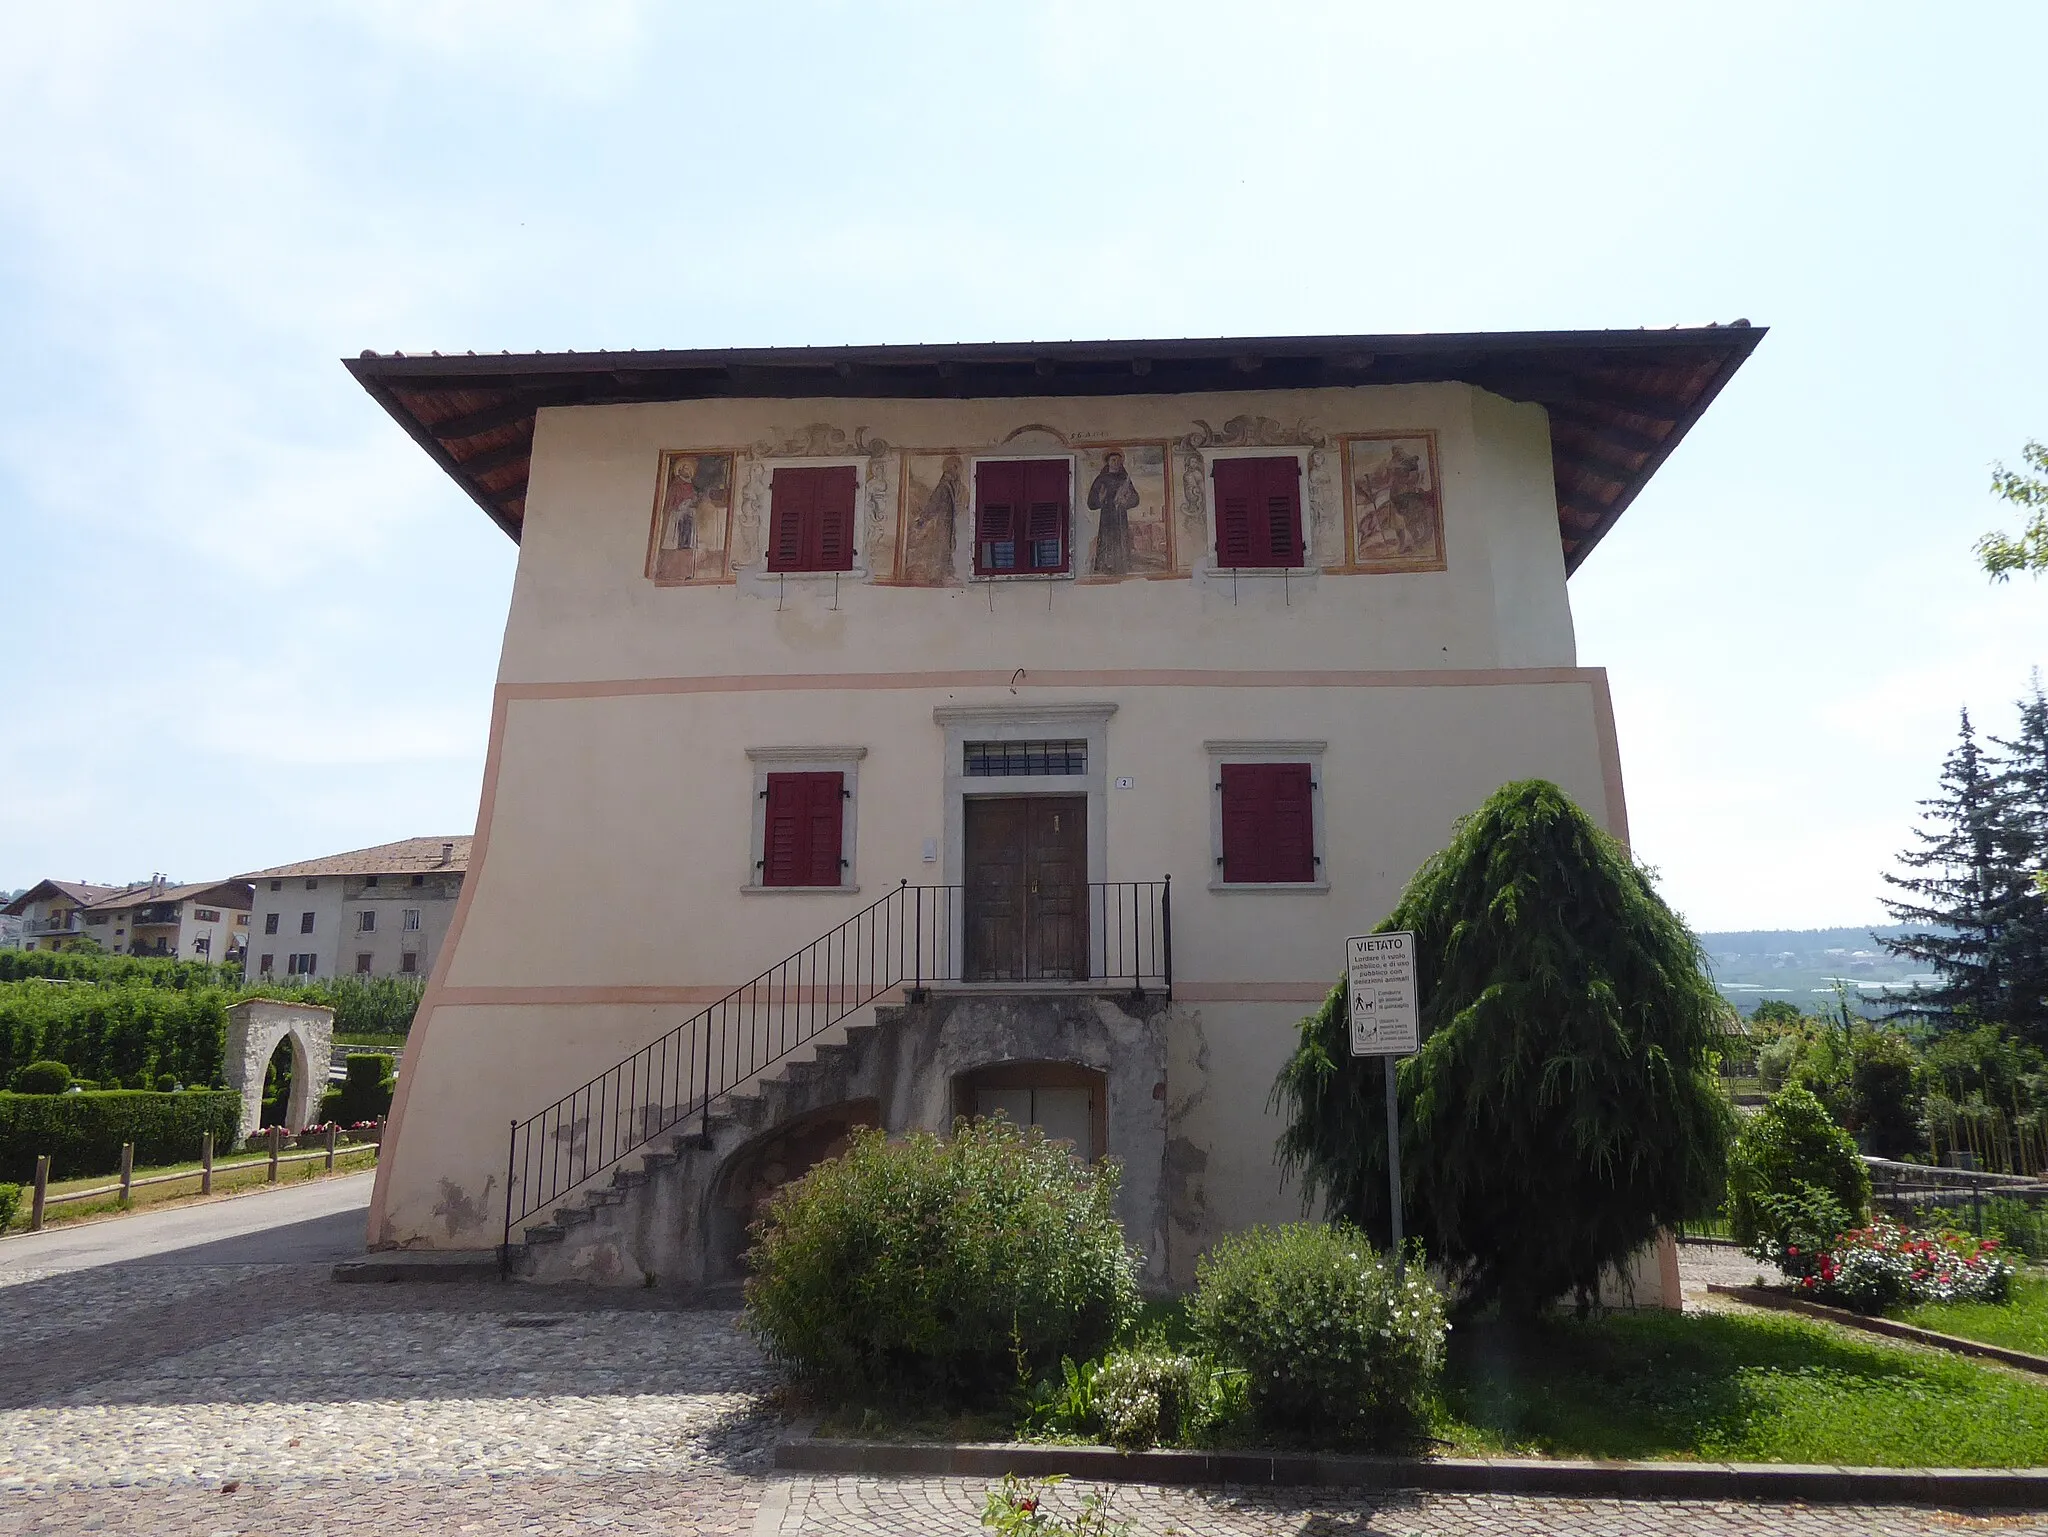 Photo showing: Casez (Sanzeno, Trentino, Italy) - House with frescos